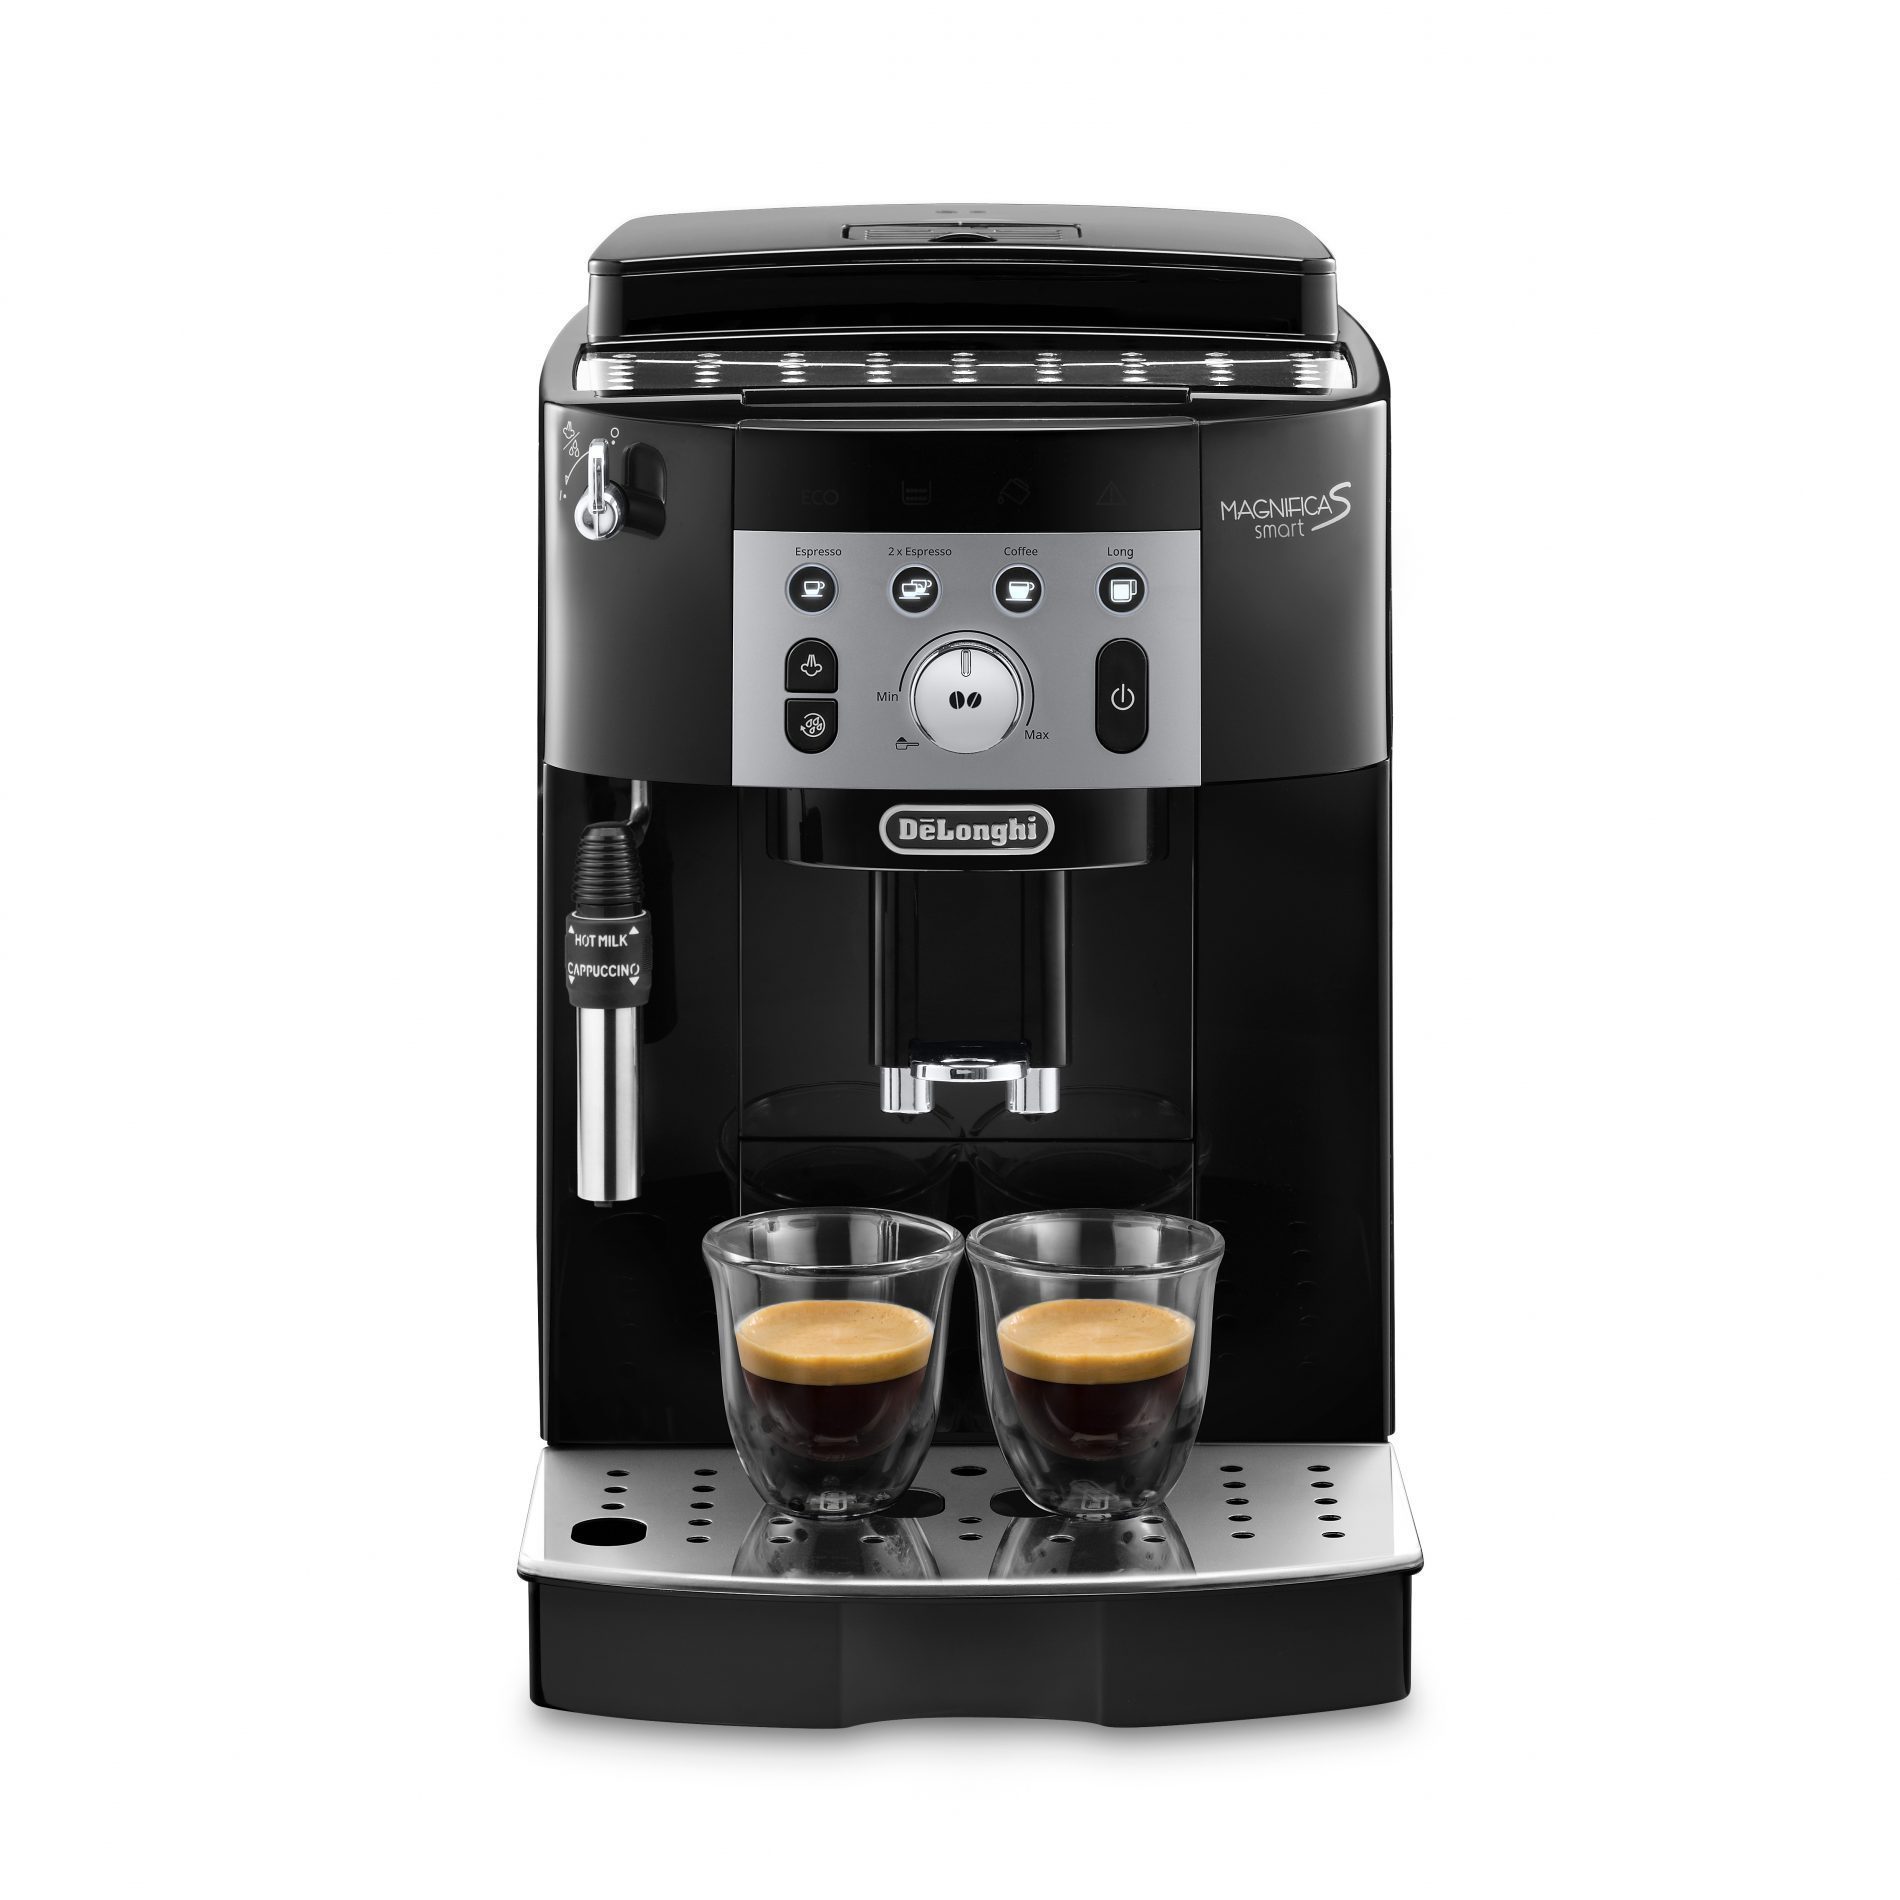 Machine à café grains Delonghi Magnifica S Smart FEB 2533.B